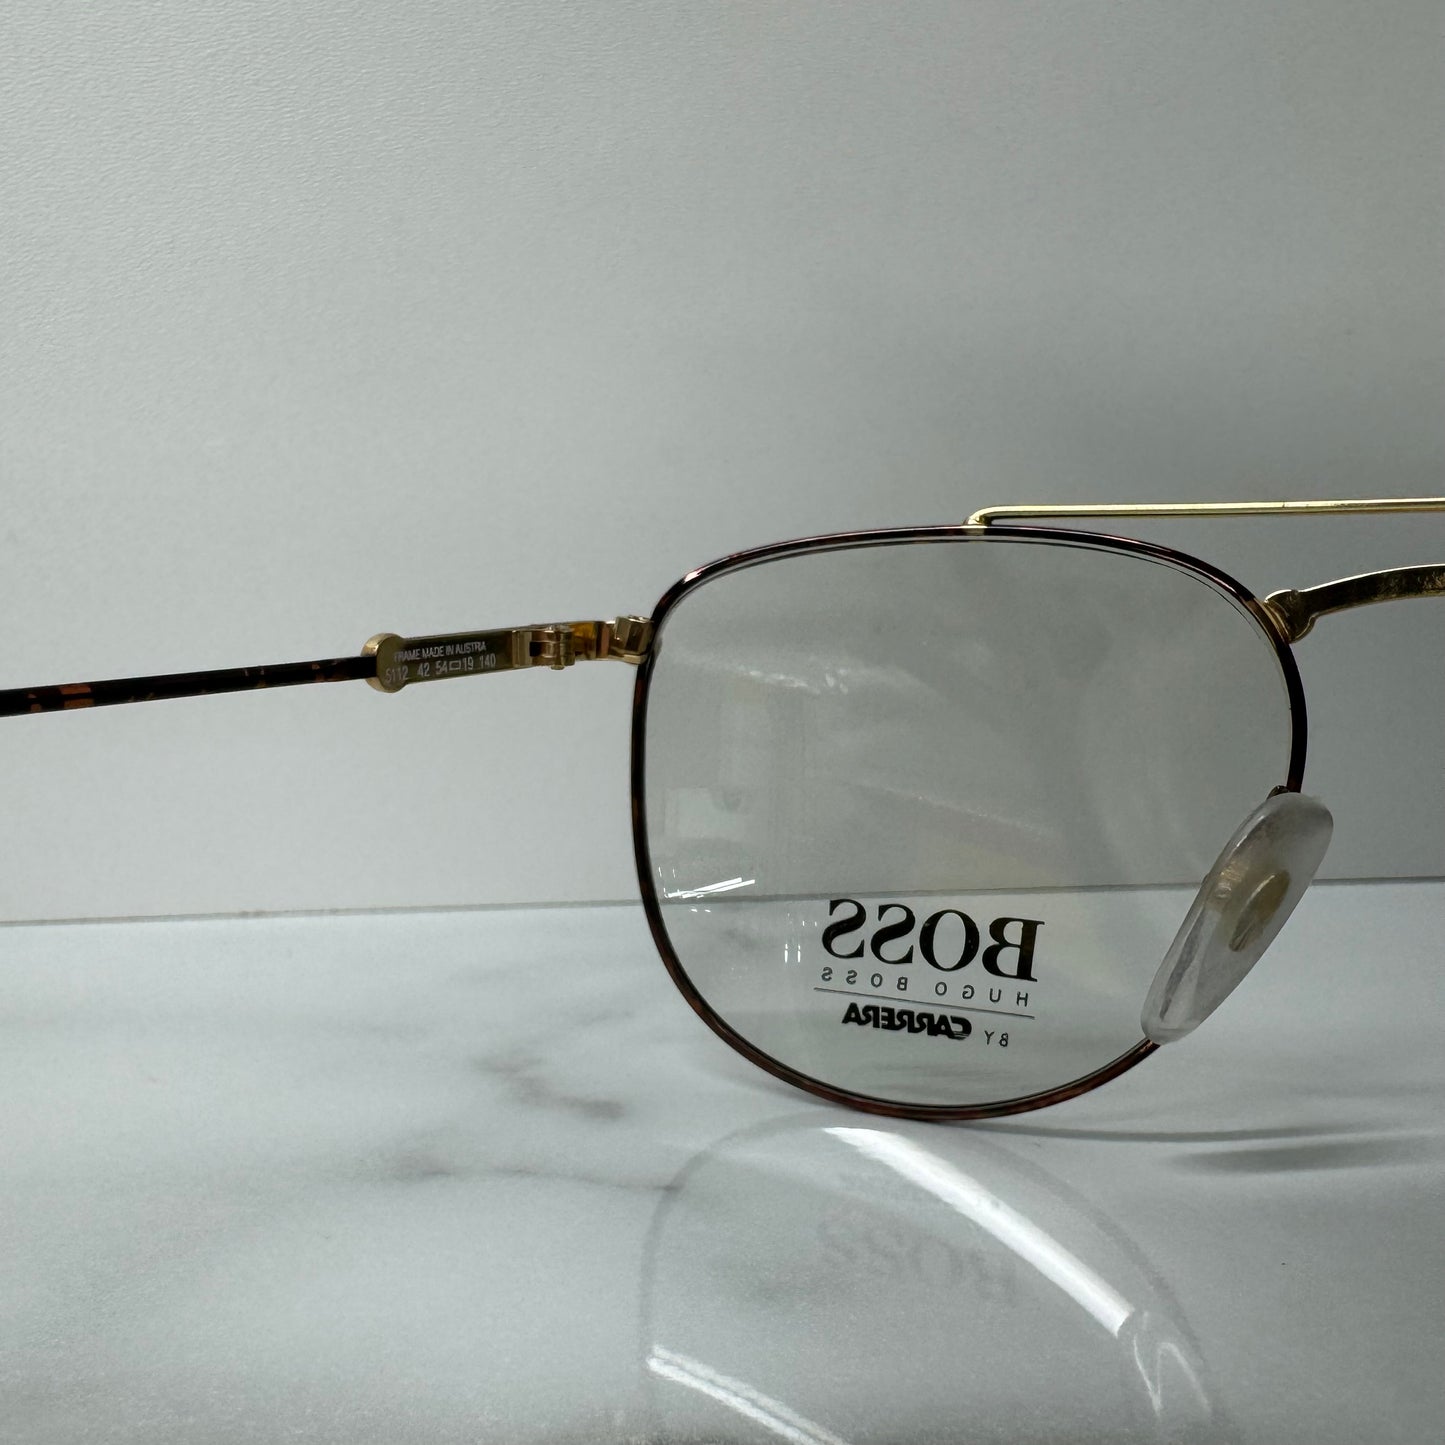 Vintage Hugo Boss By Carrera Glasses Frames - 5112 Eyeglasses